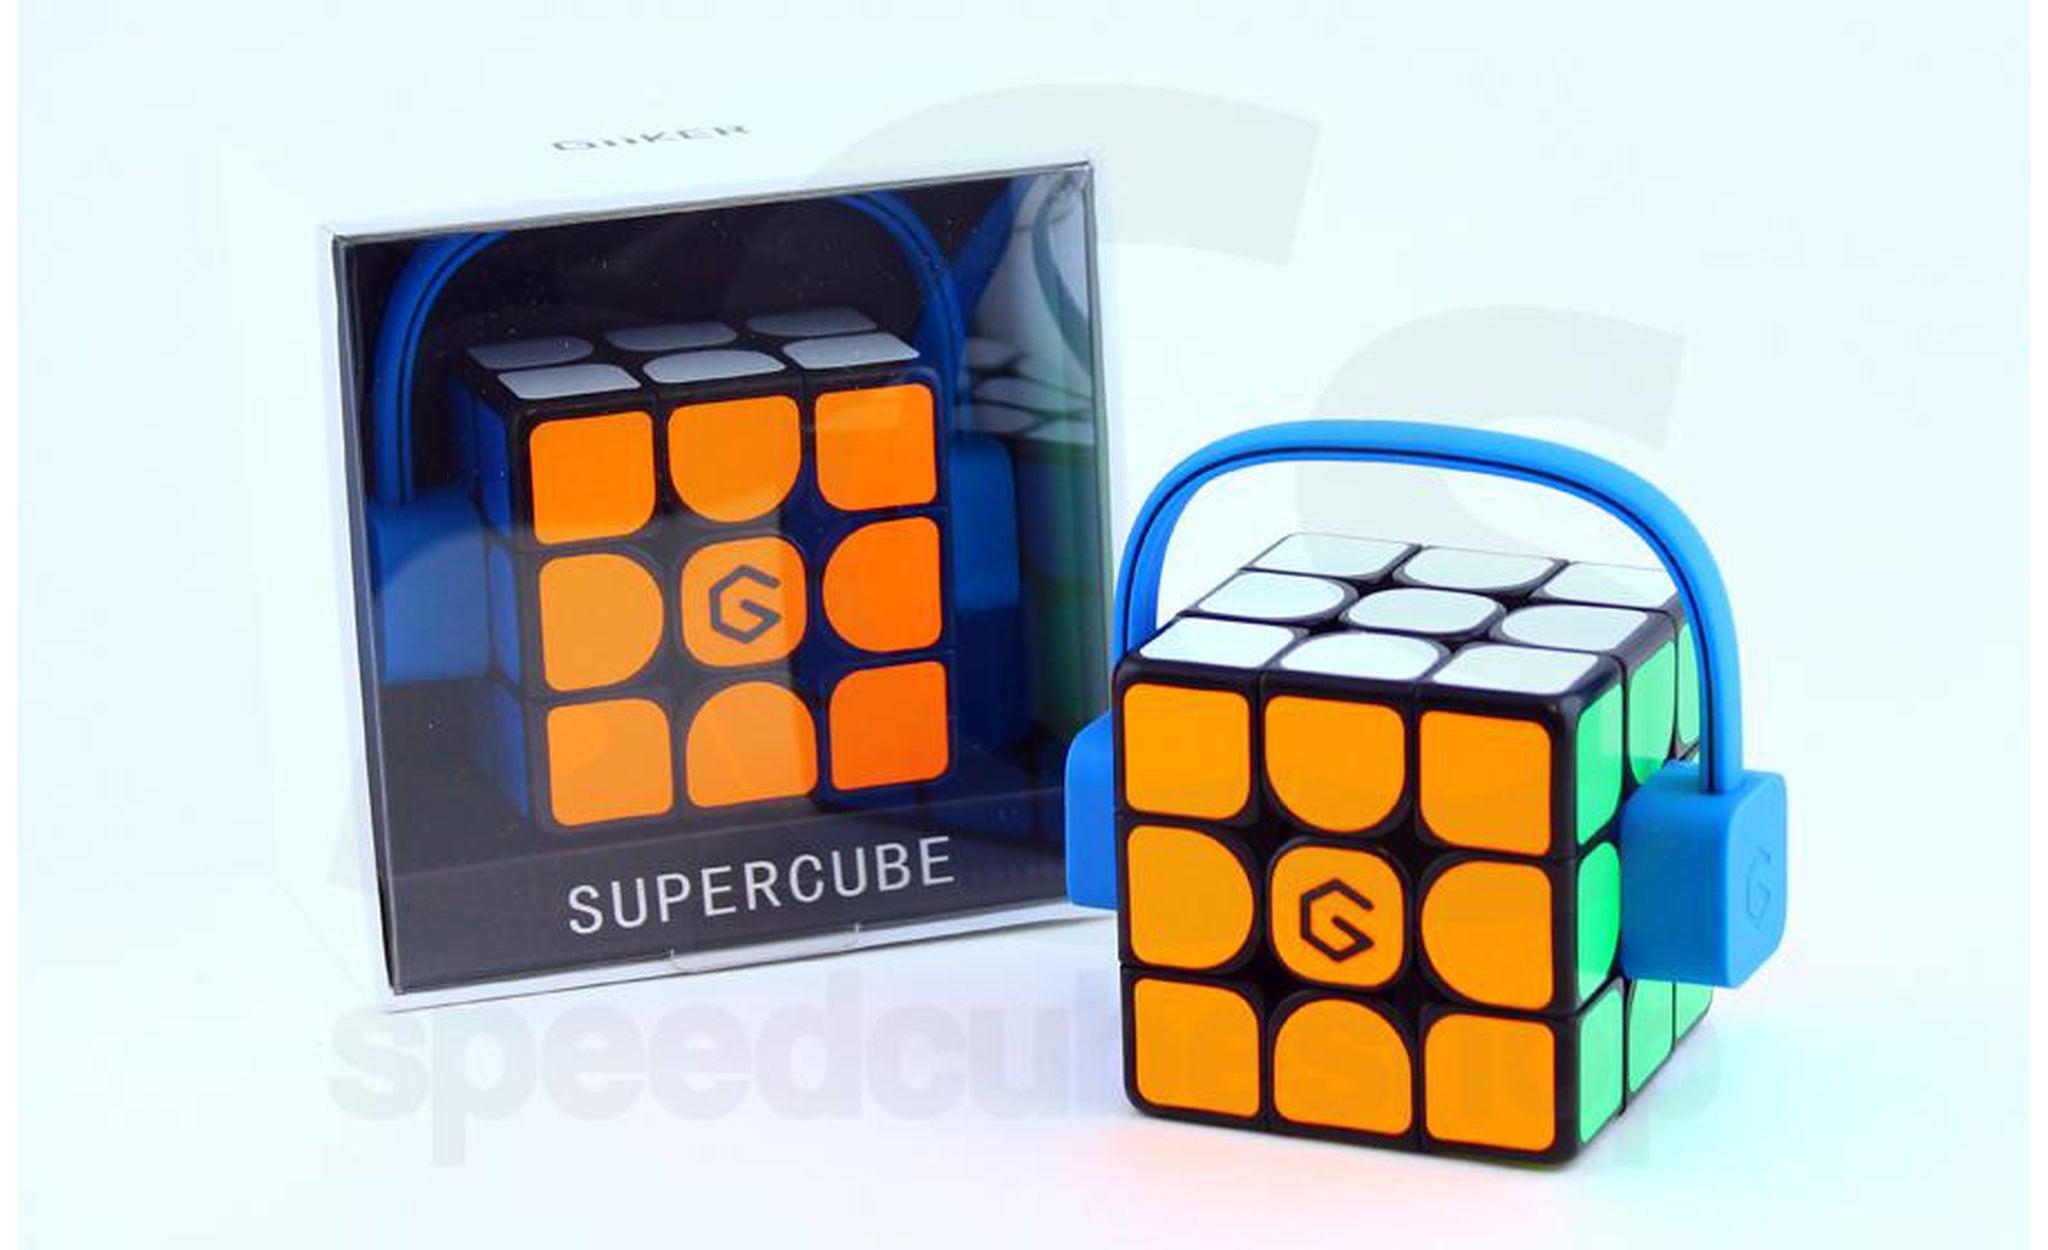 Кубик Рубика Giiker super Cube i3. Таймер для кубика Рубика. Кубик Рубика Xiaomi Giiker m3 3x3x3 (Сяоми Гикер м3 3х3х3). Кубик Рубика Сяоми Гикер i3s. Giiker smart four игра